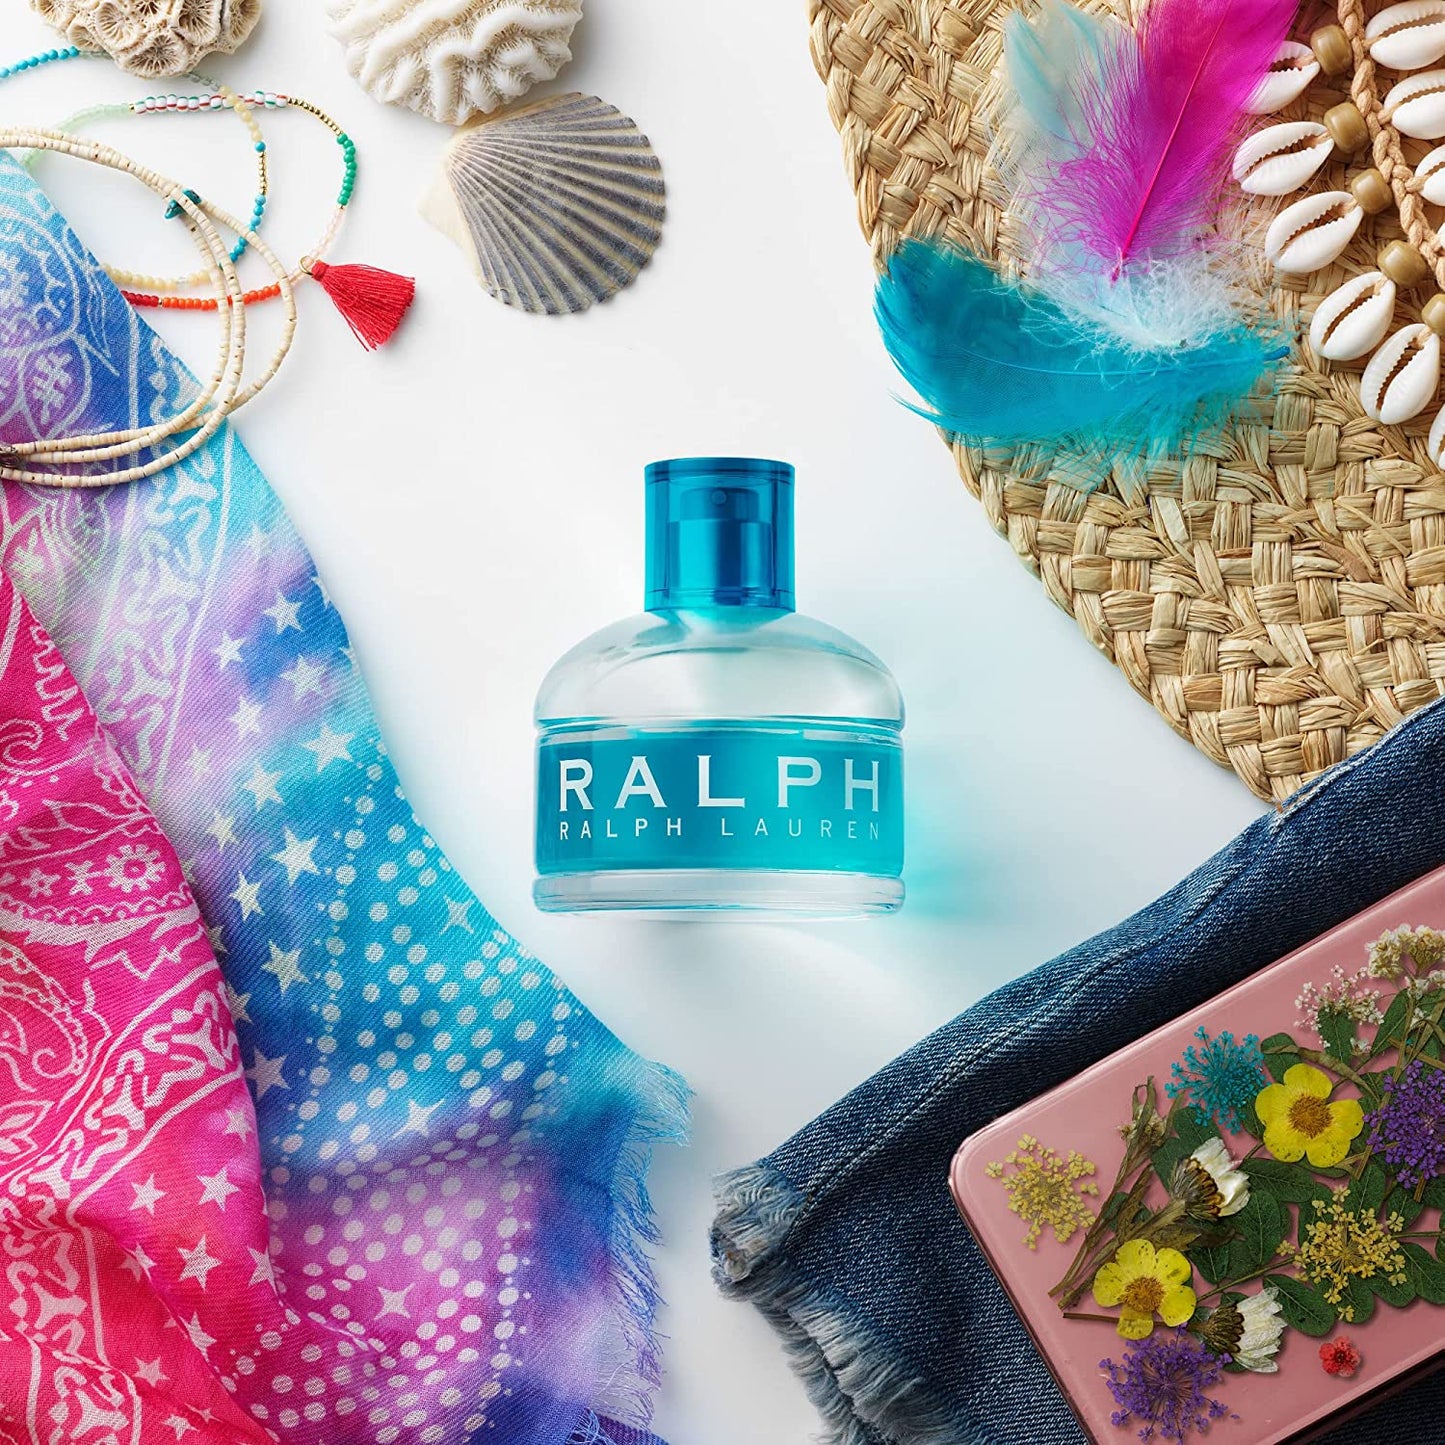 Ralph Lauren - Ralph - Eau de Toilette - Women's Perfume - Fresh & Floral - With Magnolia, Apple, and Iris - Medium Intensity